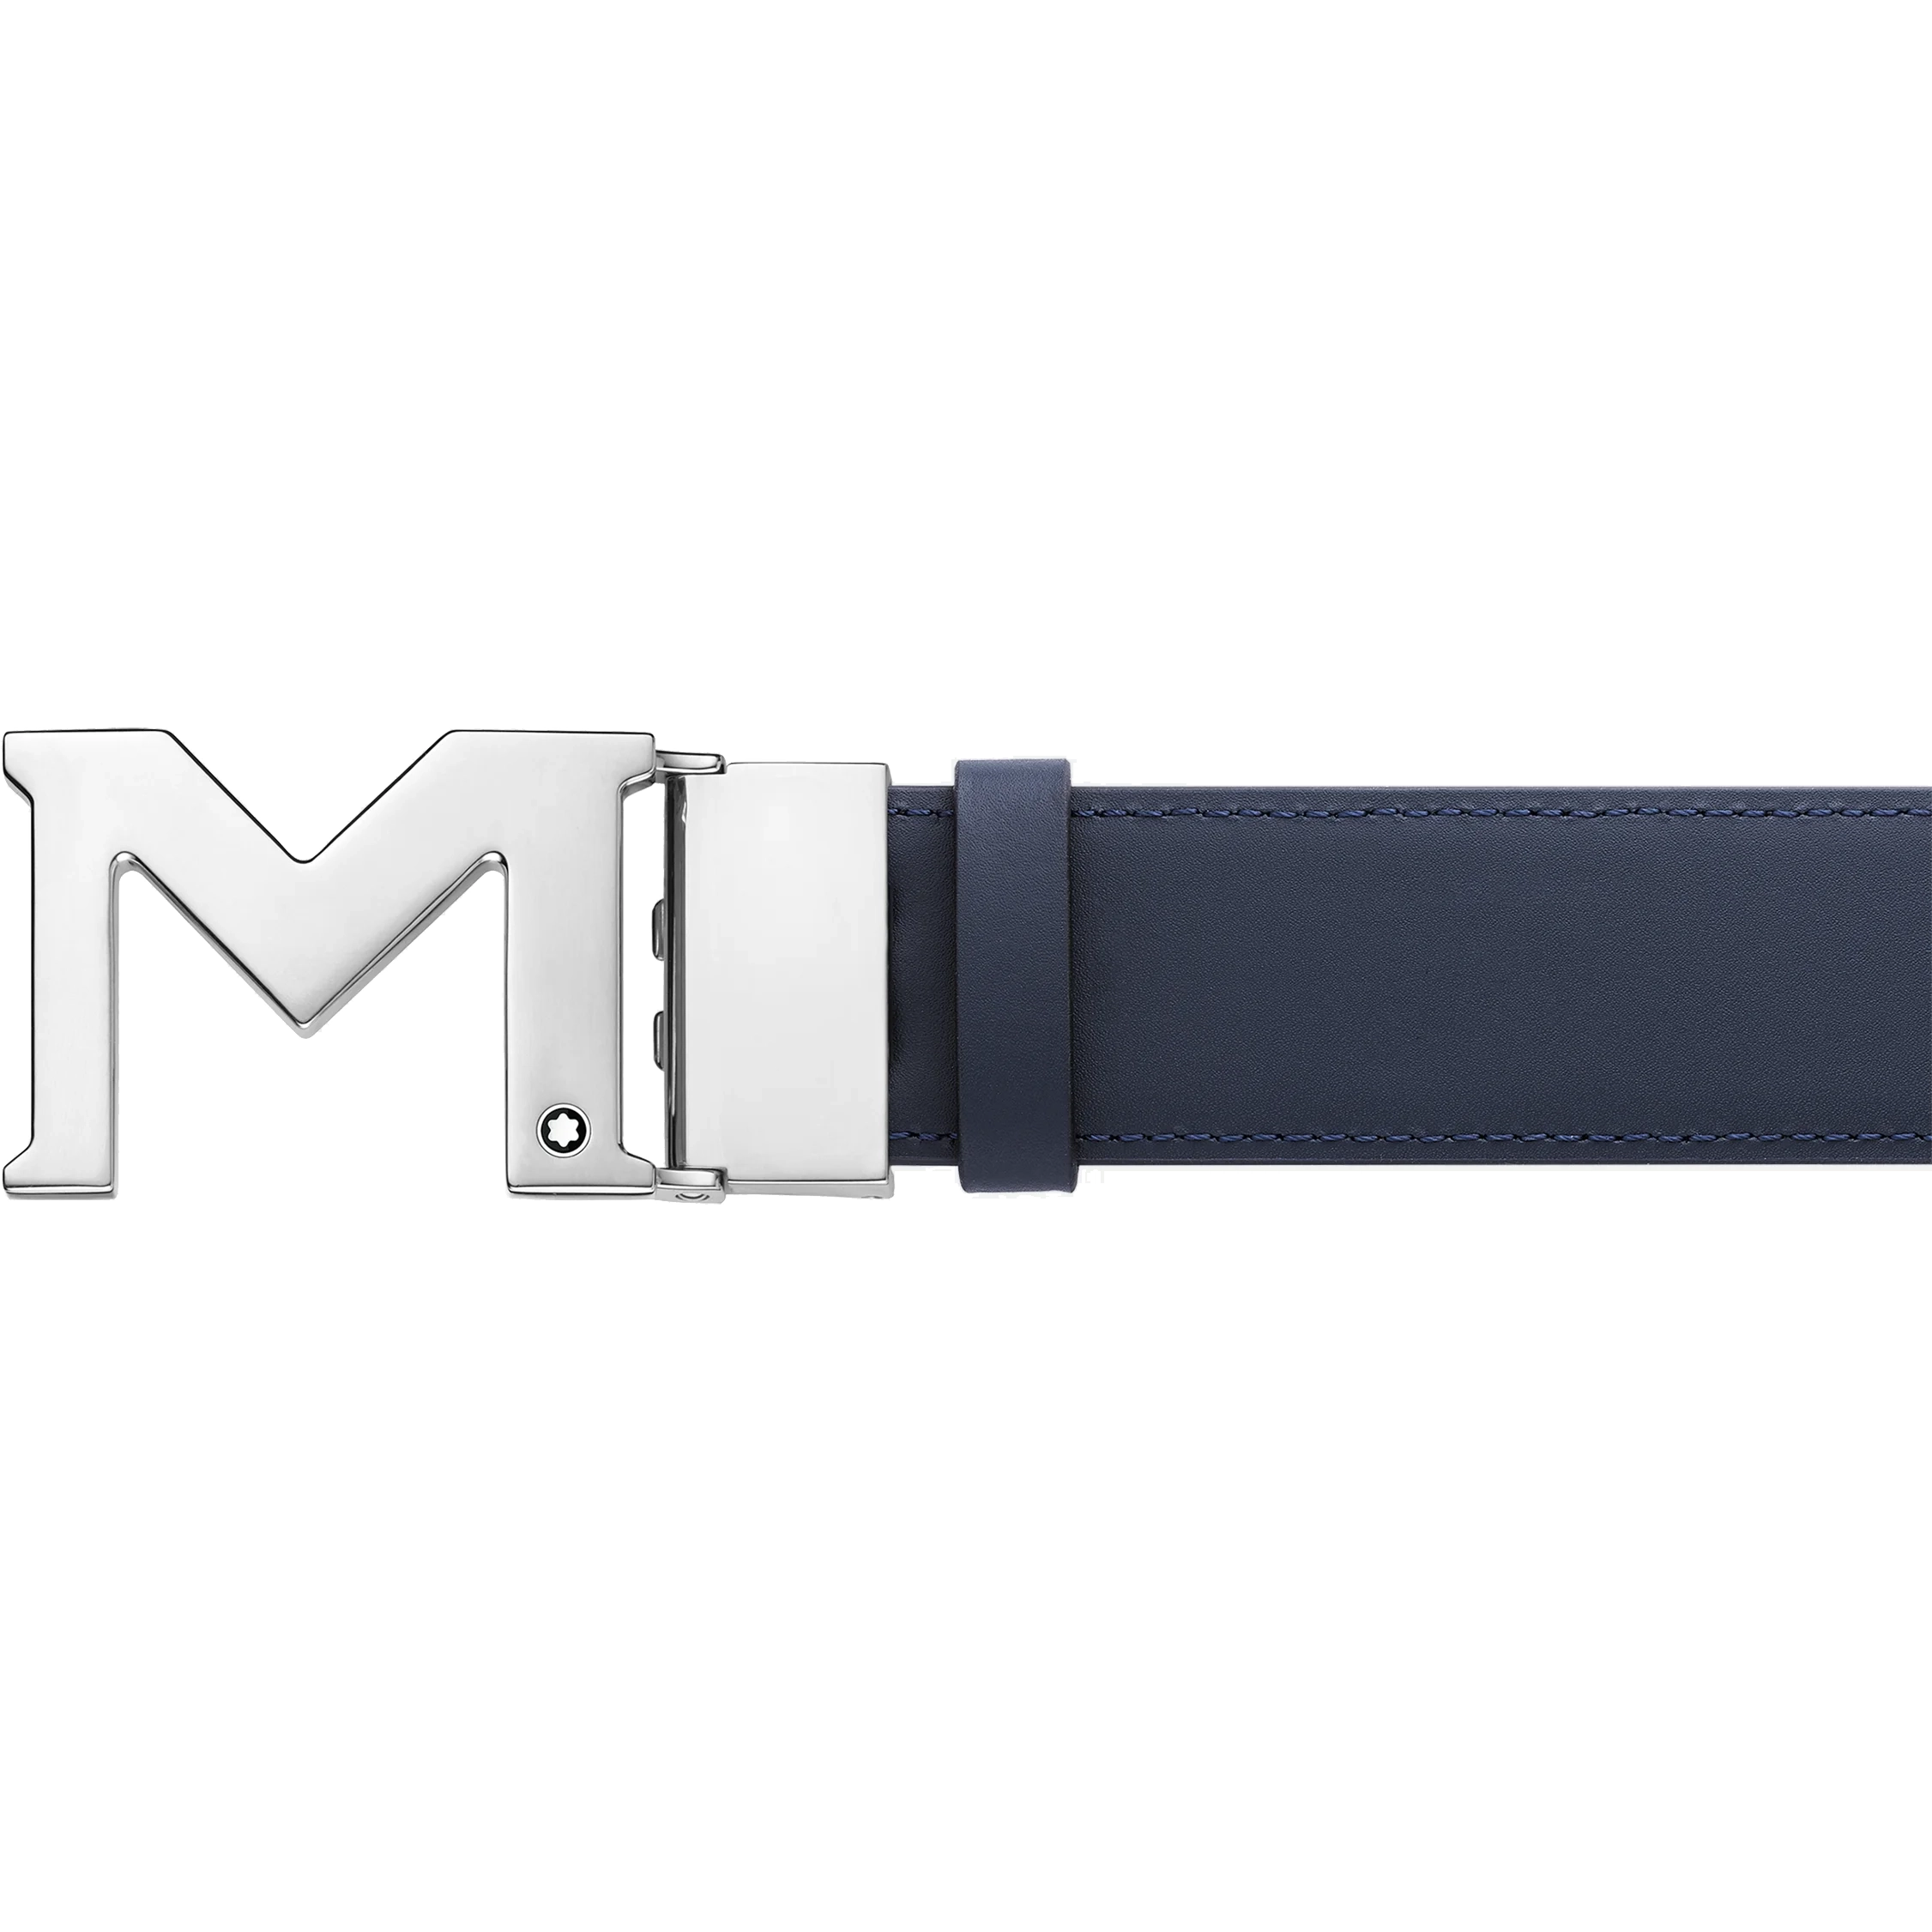 Montblanc belt 35mm with black/blue leather M buckle reversible size adjustable 128787